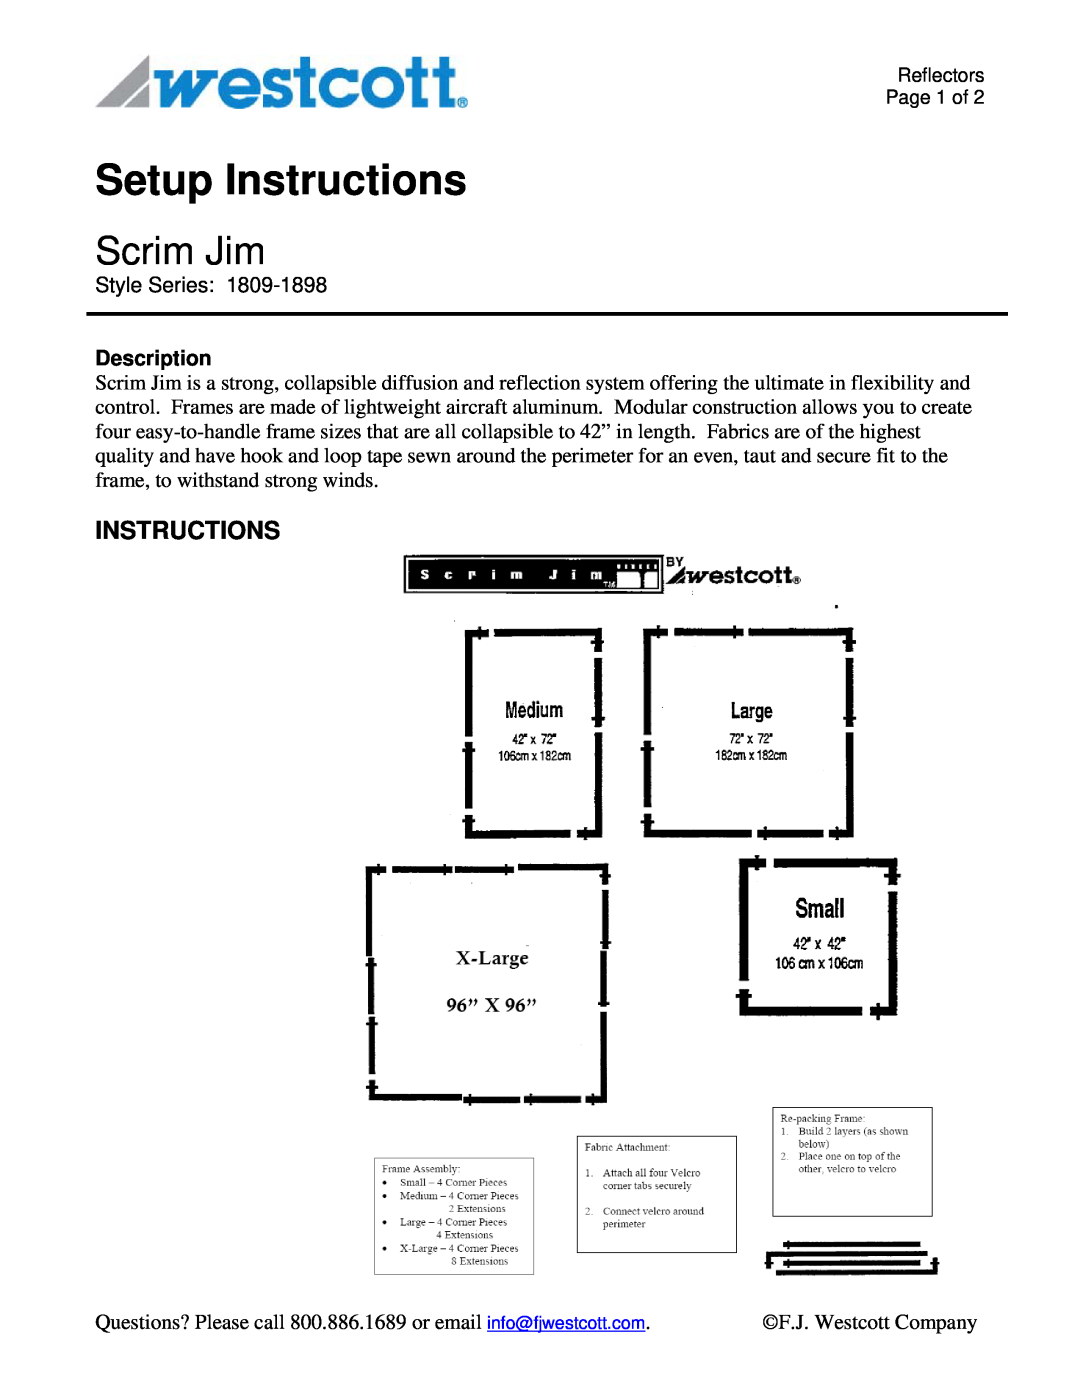 Westcott 1879 manual Setup Instructions, Scrim Jim, Description 